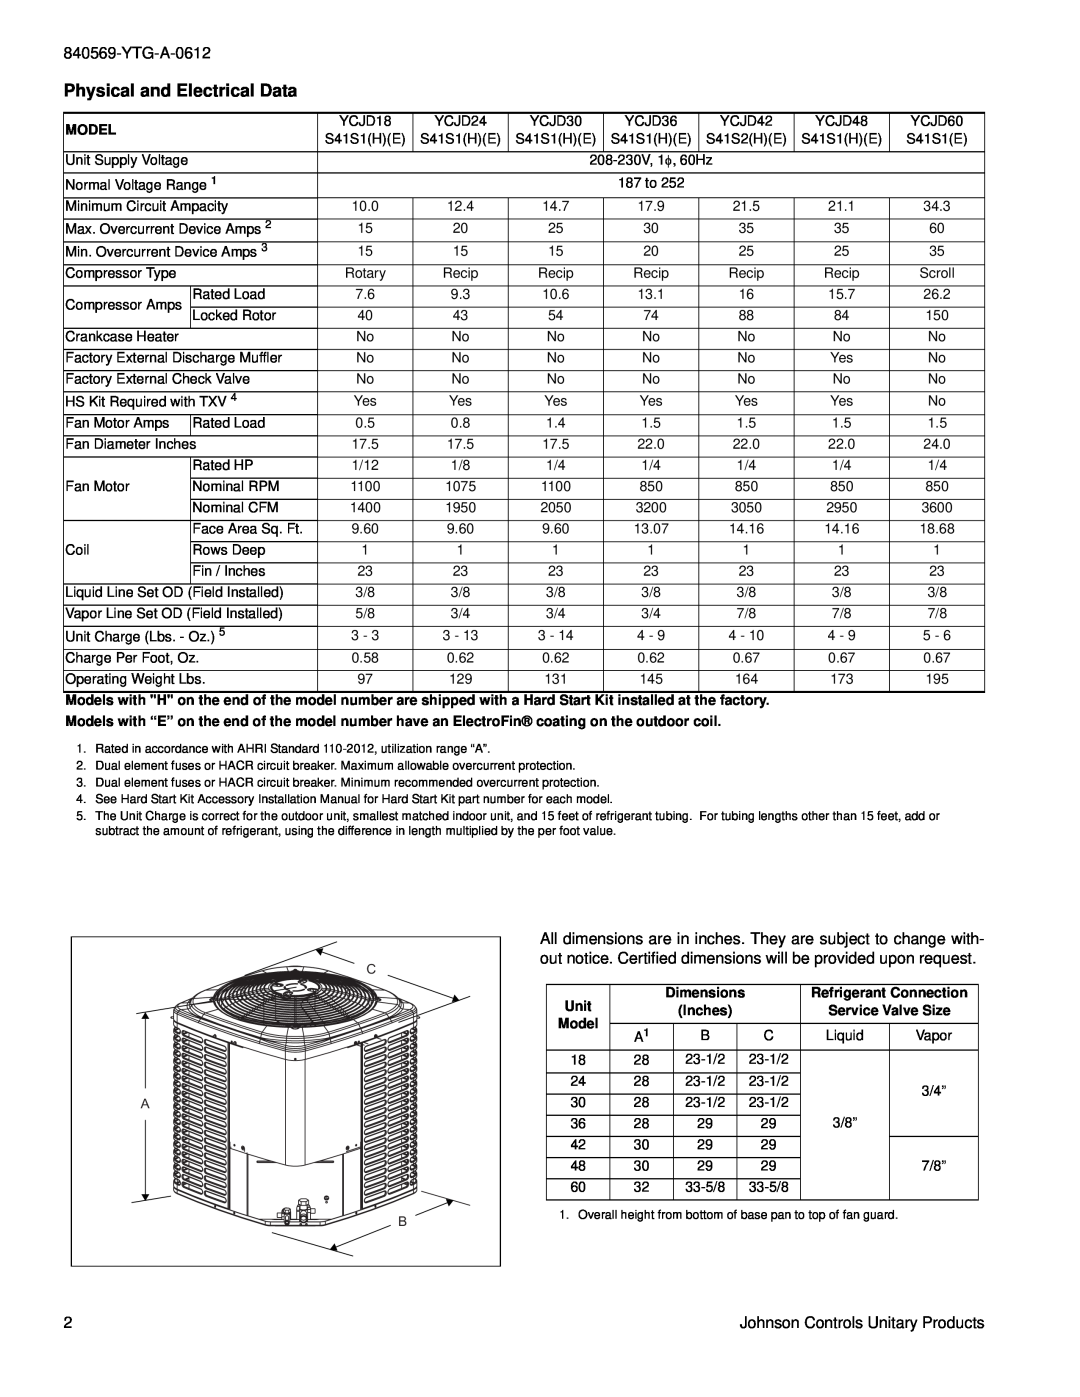 York YCJD18 THRU 60 warranty Physical and Electrical Data, YTG-A-0612, Johnson Controls Unitary Products 